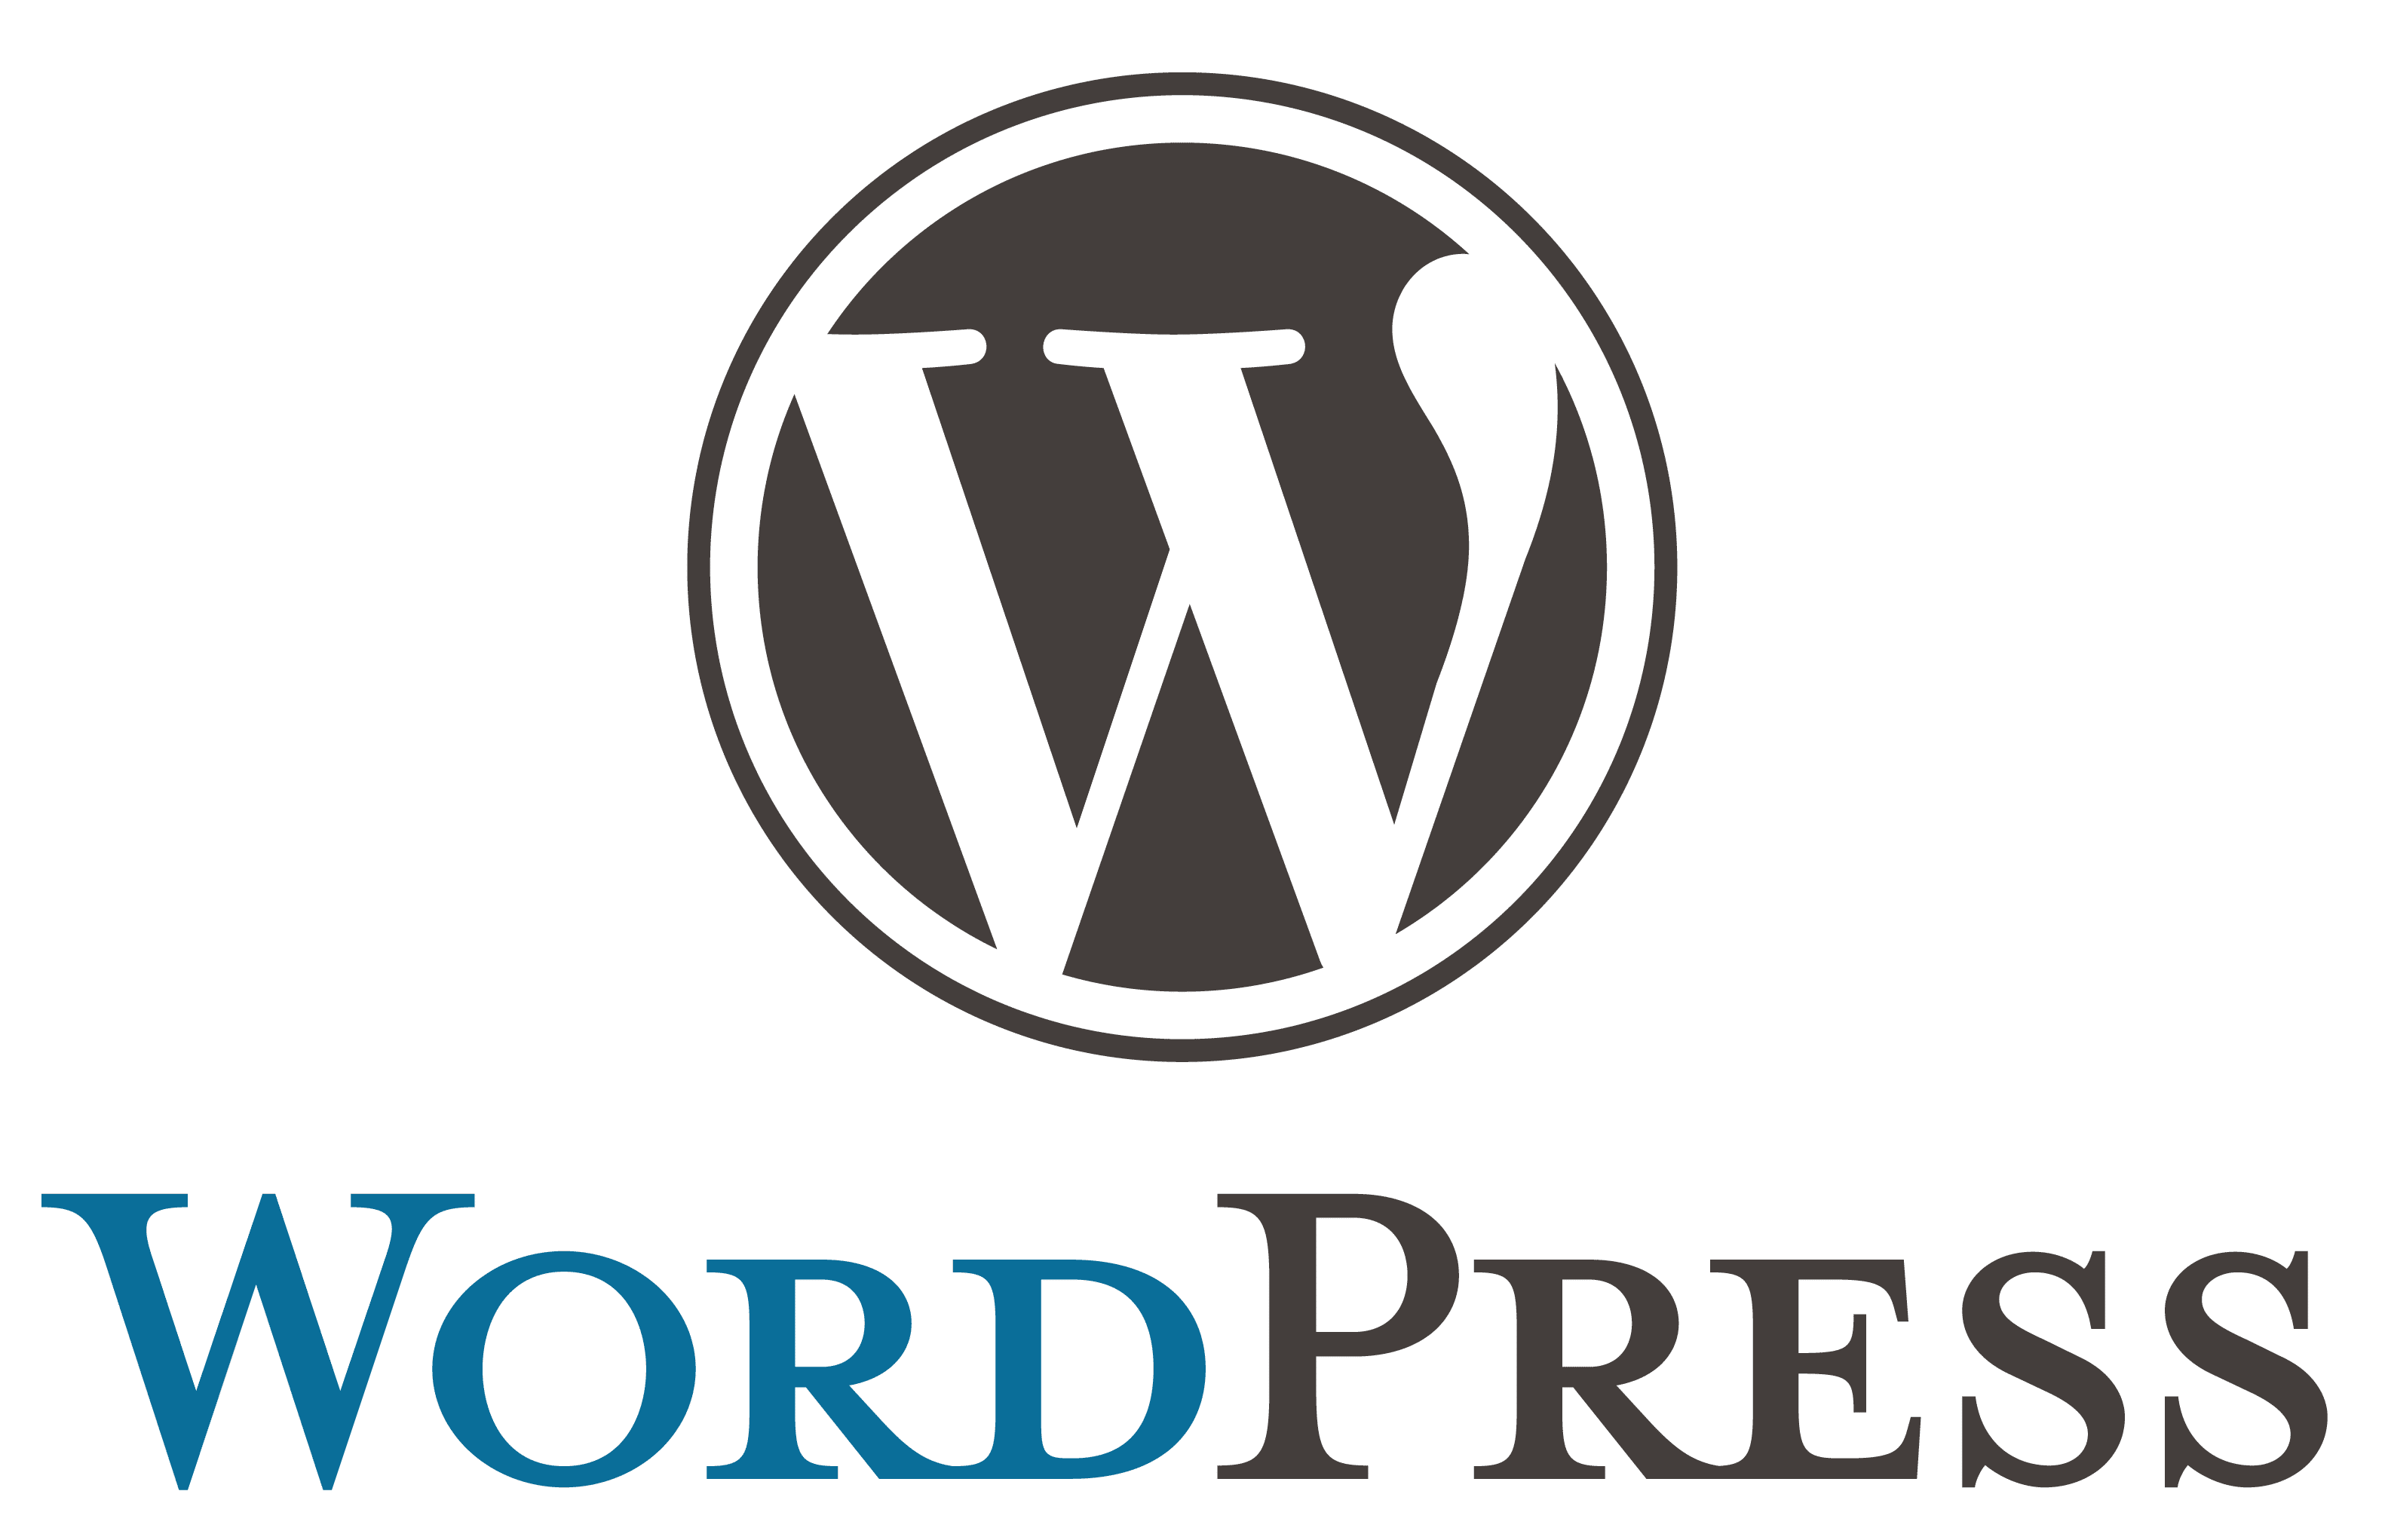 WordPress - CMS - Création site internet